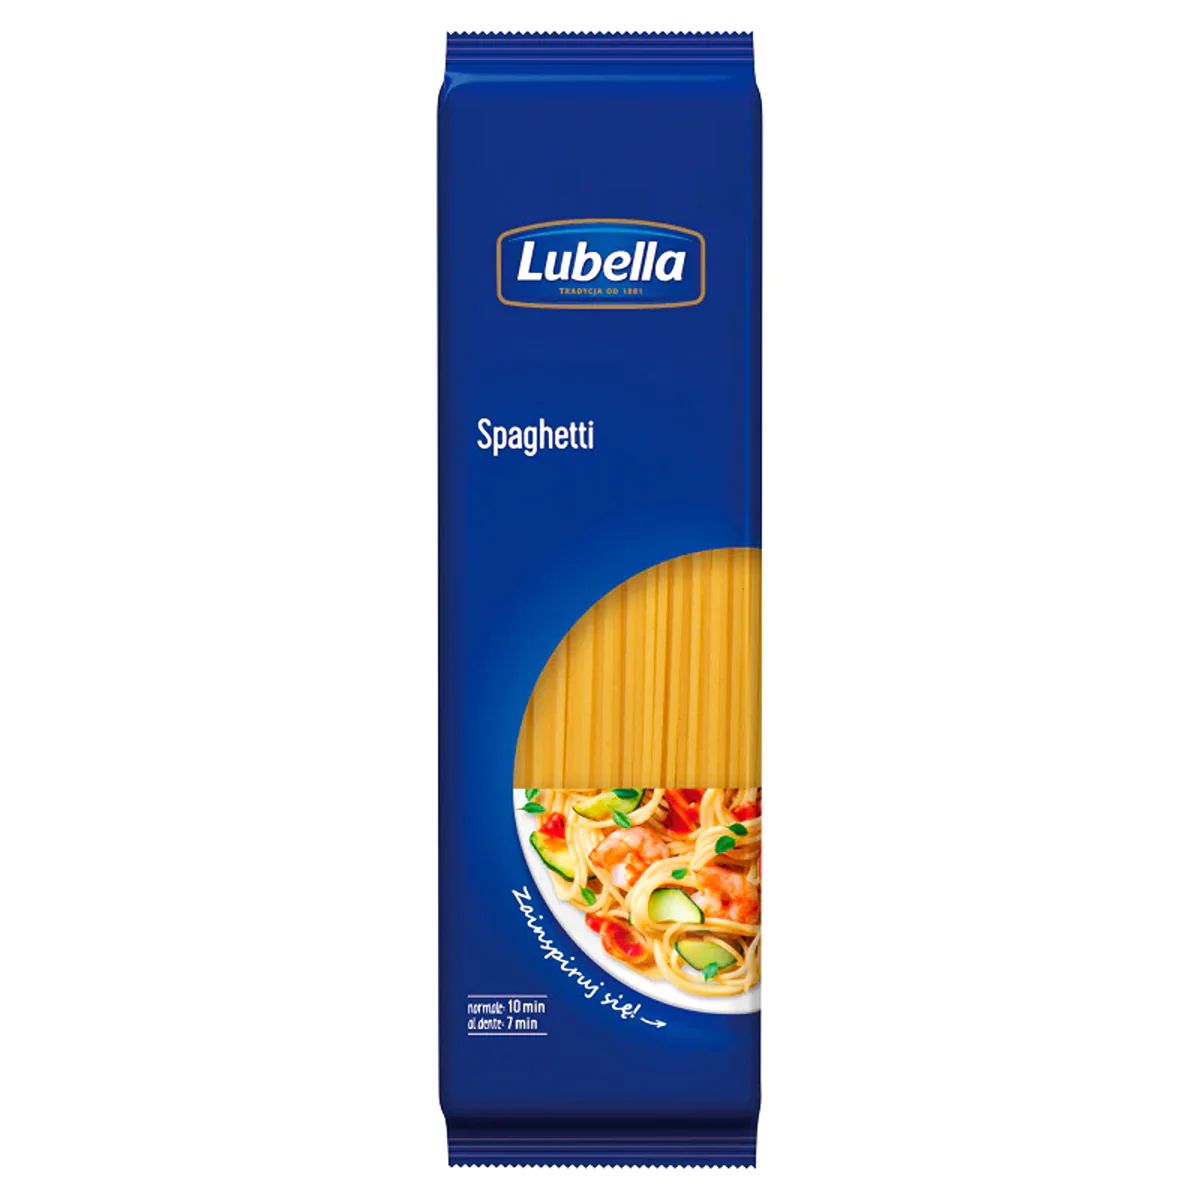 A package of Lubella - Spaghetti Pasta - 400g.